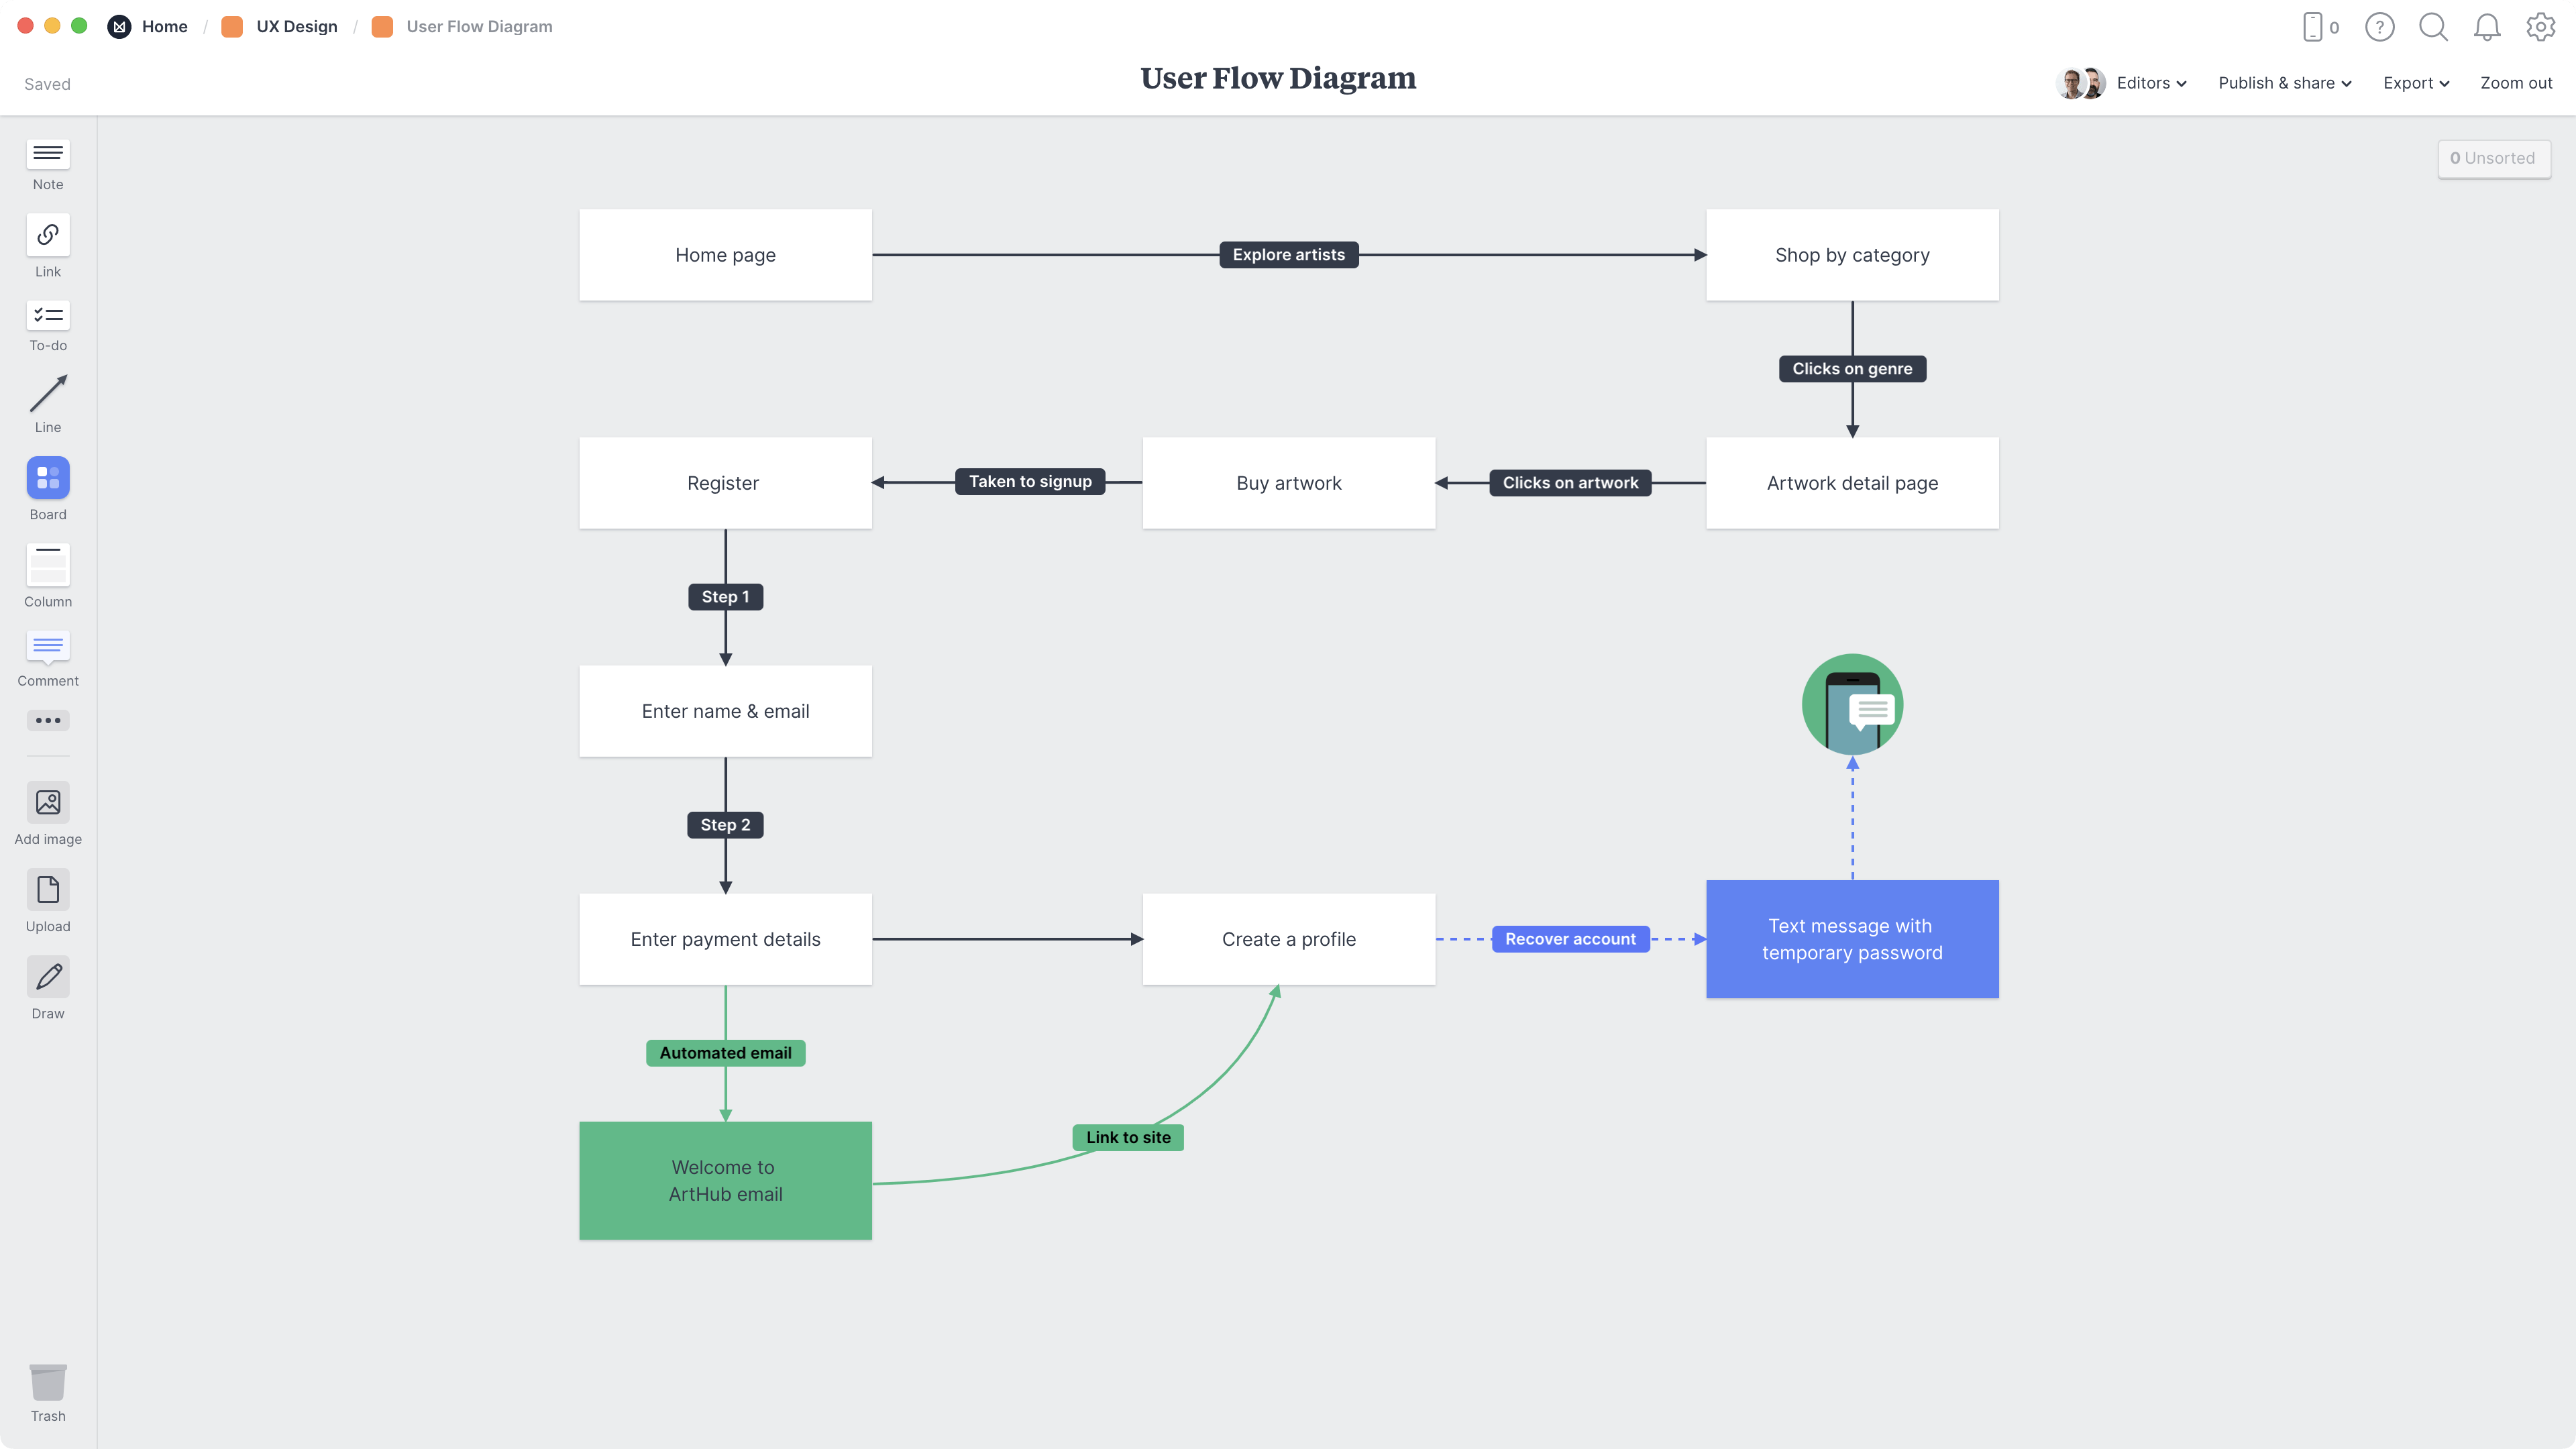 User Flow Diagram - Free Template & Example - Milanote